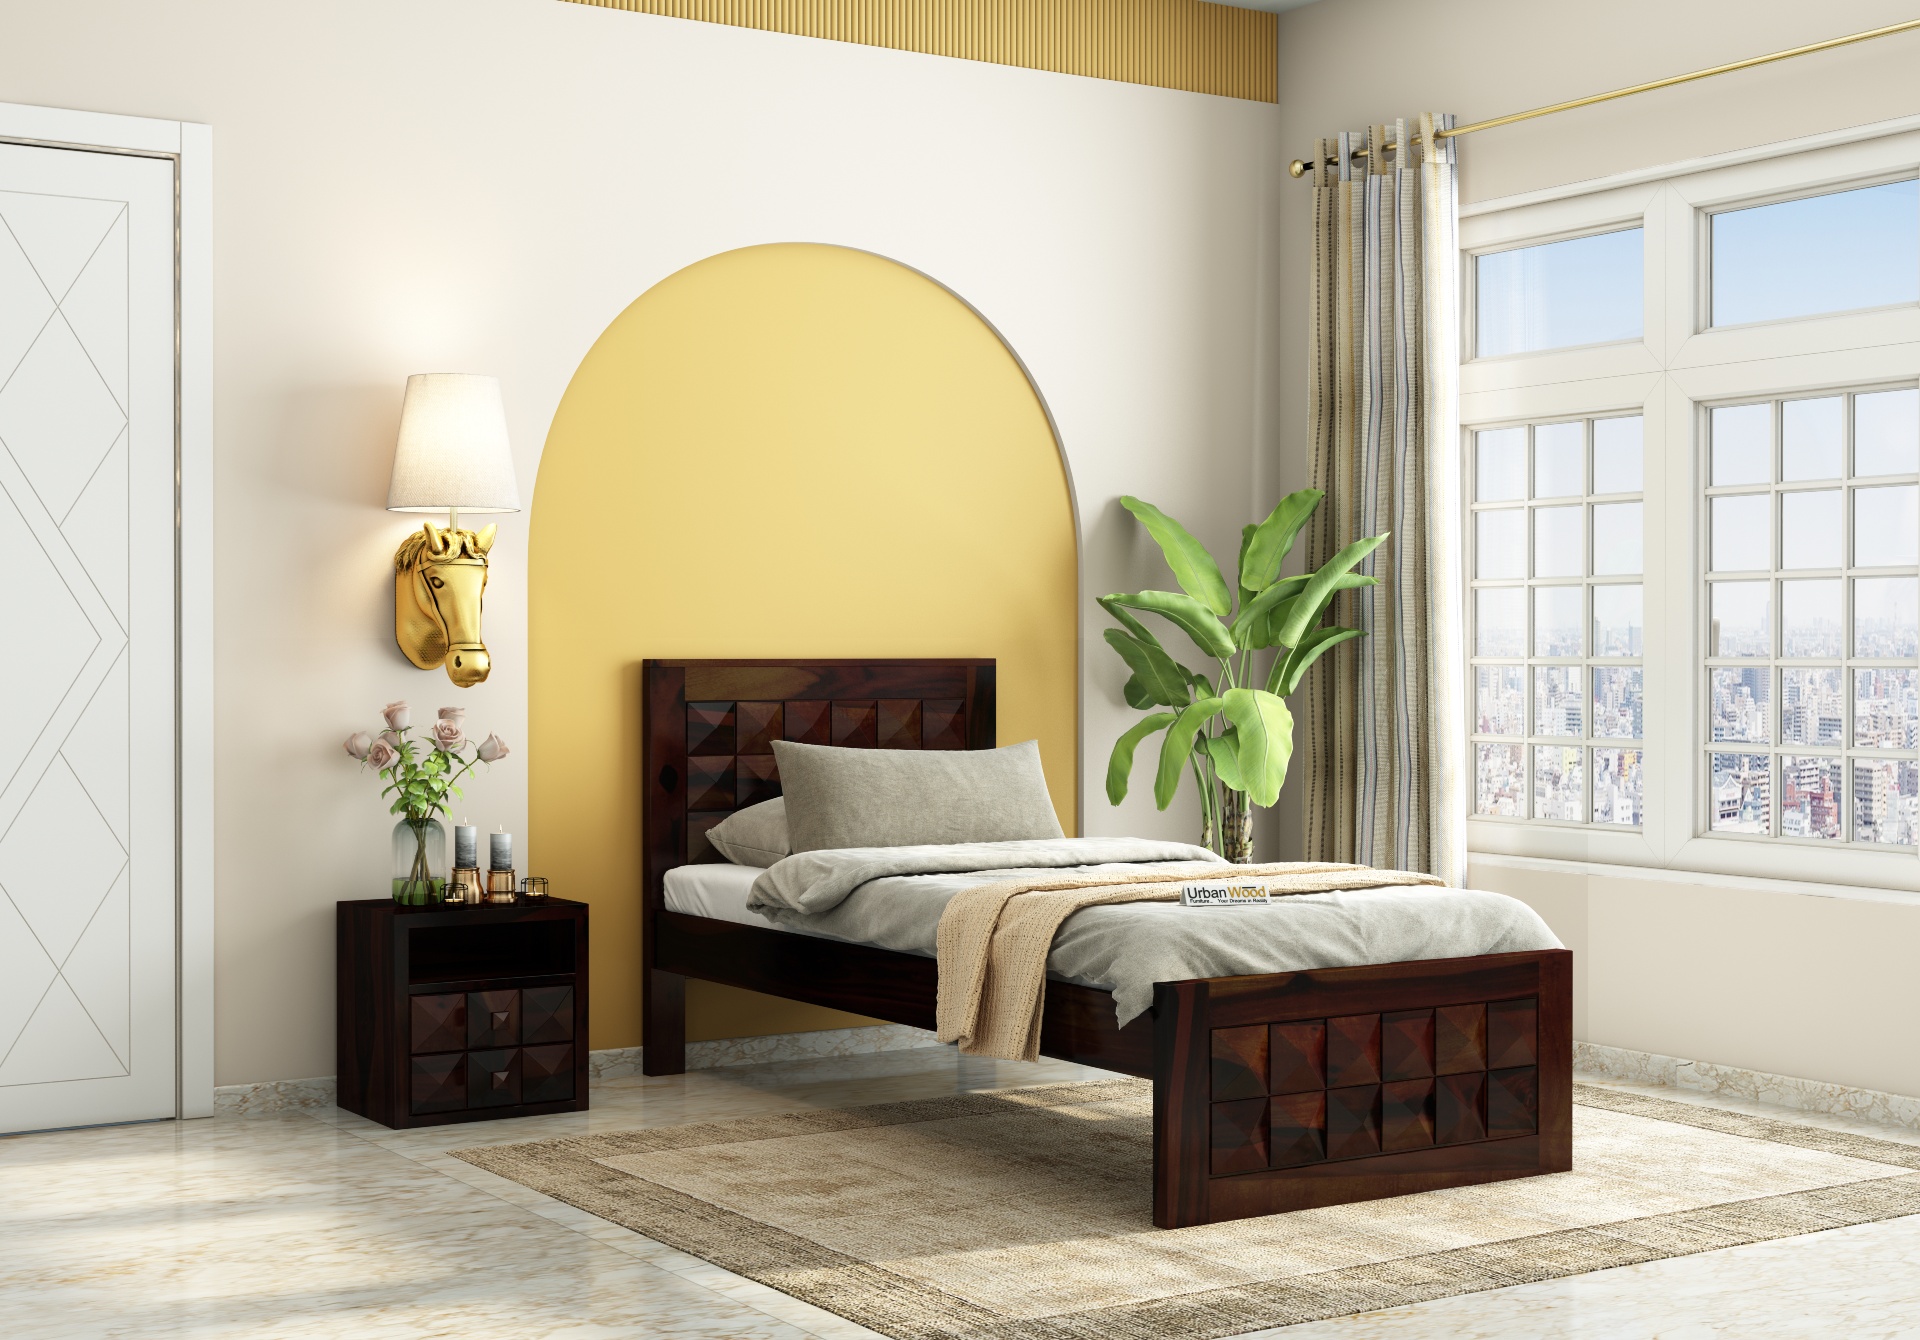 Morgana single bed without storage ( Walnut Finish )